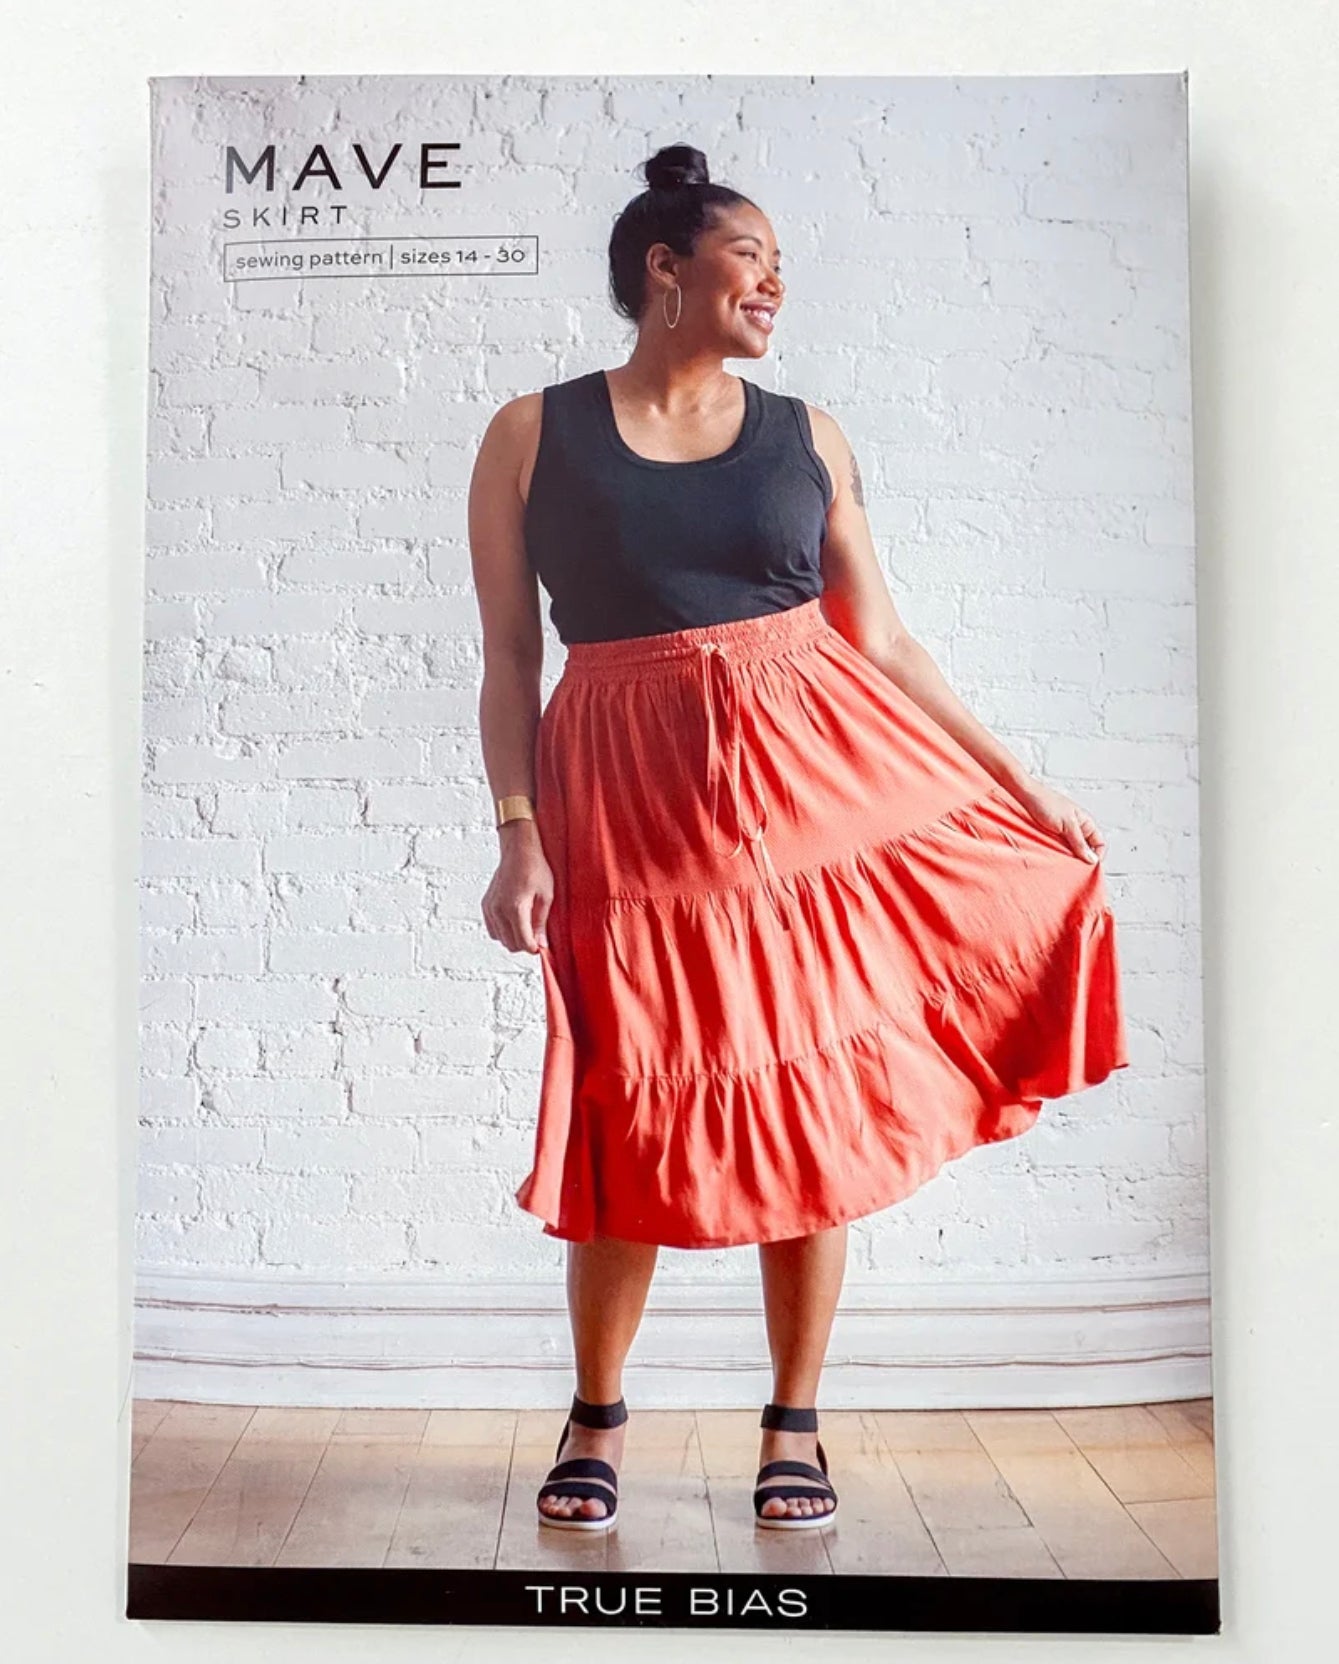 True / Bias  -  MAVE Skirt Sewing Pattern 14-30